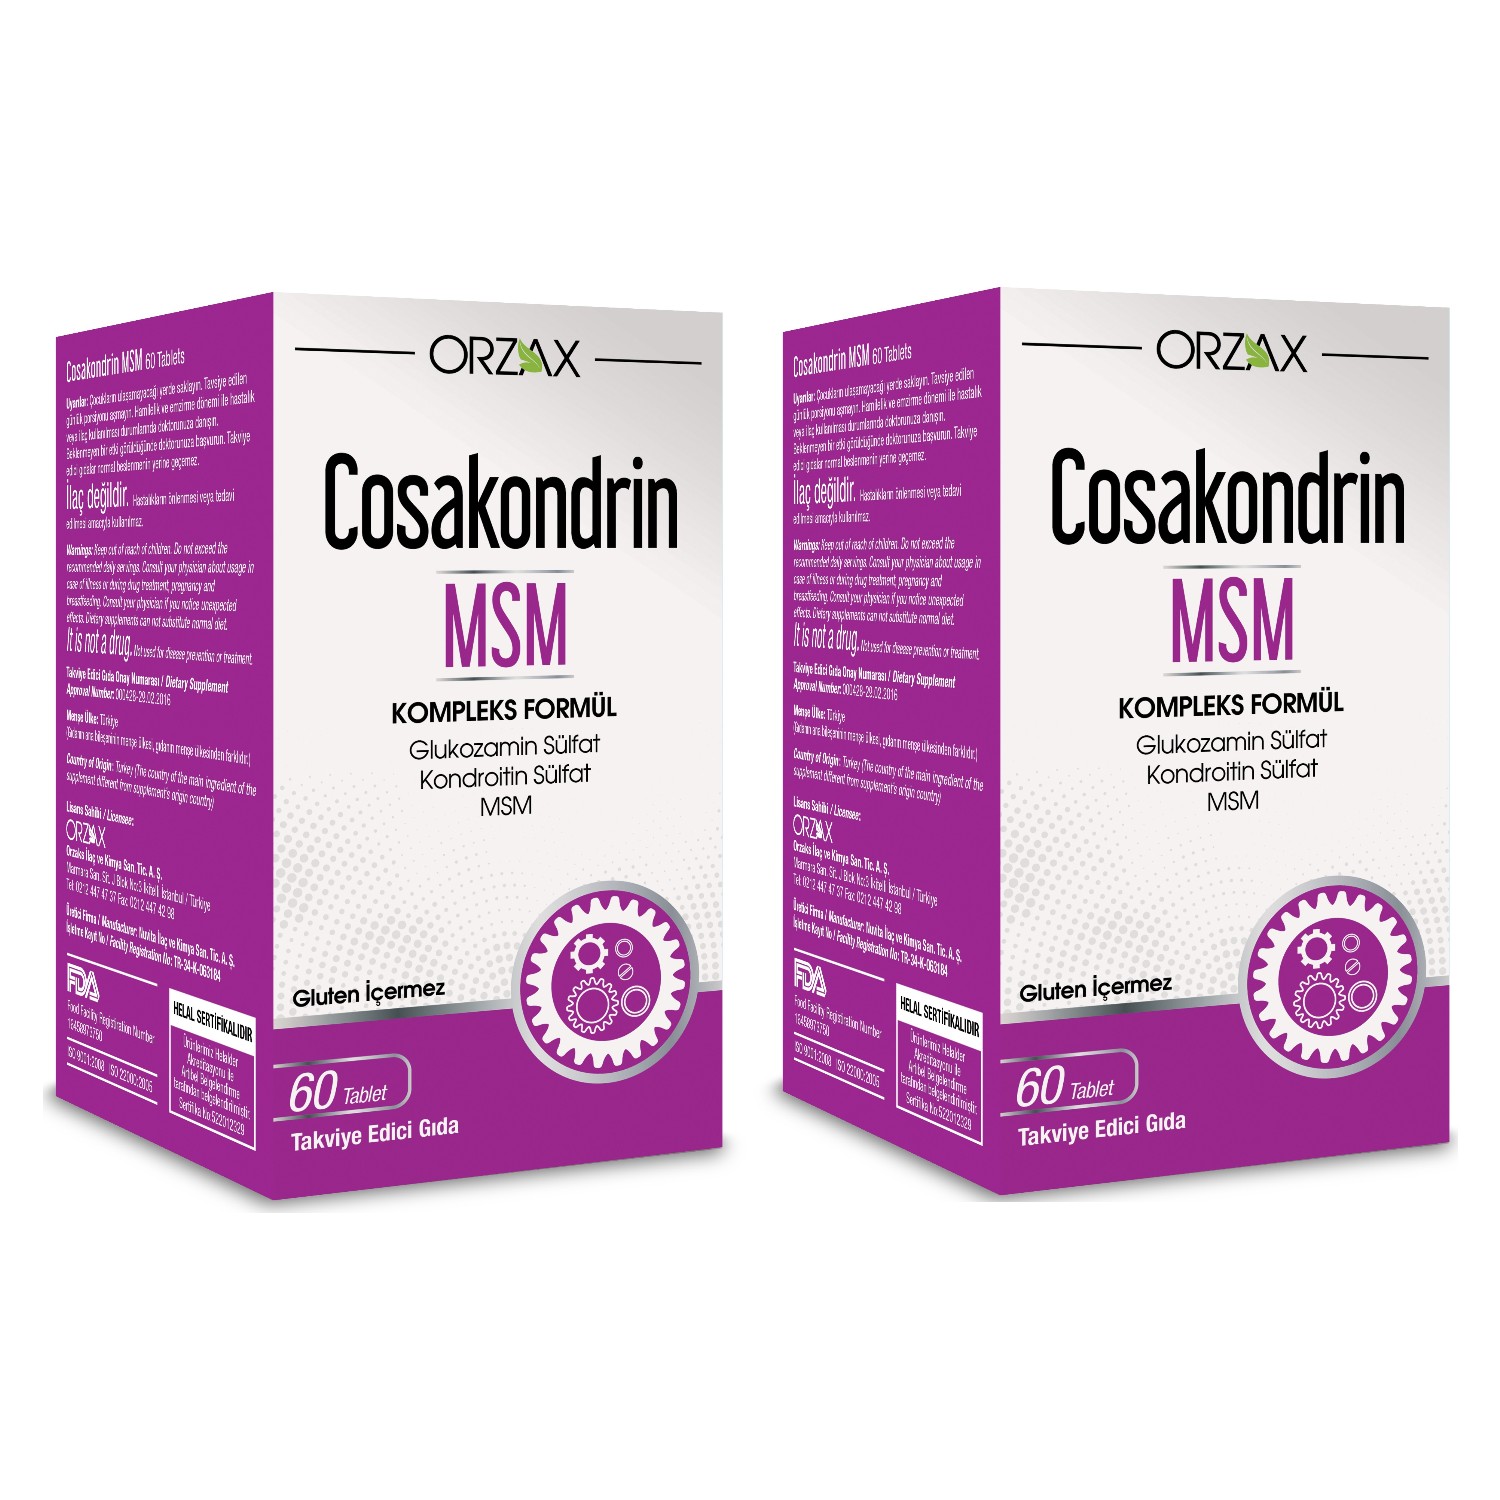 Пищевая добавка Orzax Cosakondrin Msm, 2 упаковки по 60 таблеток